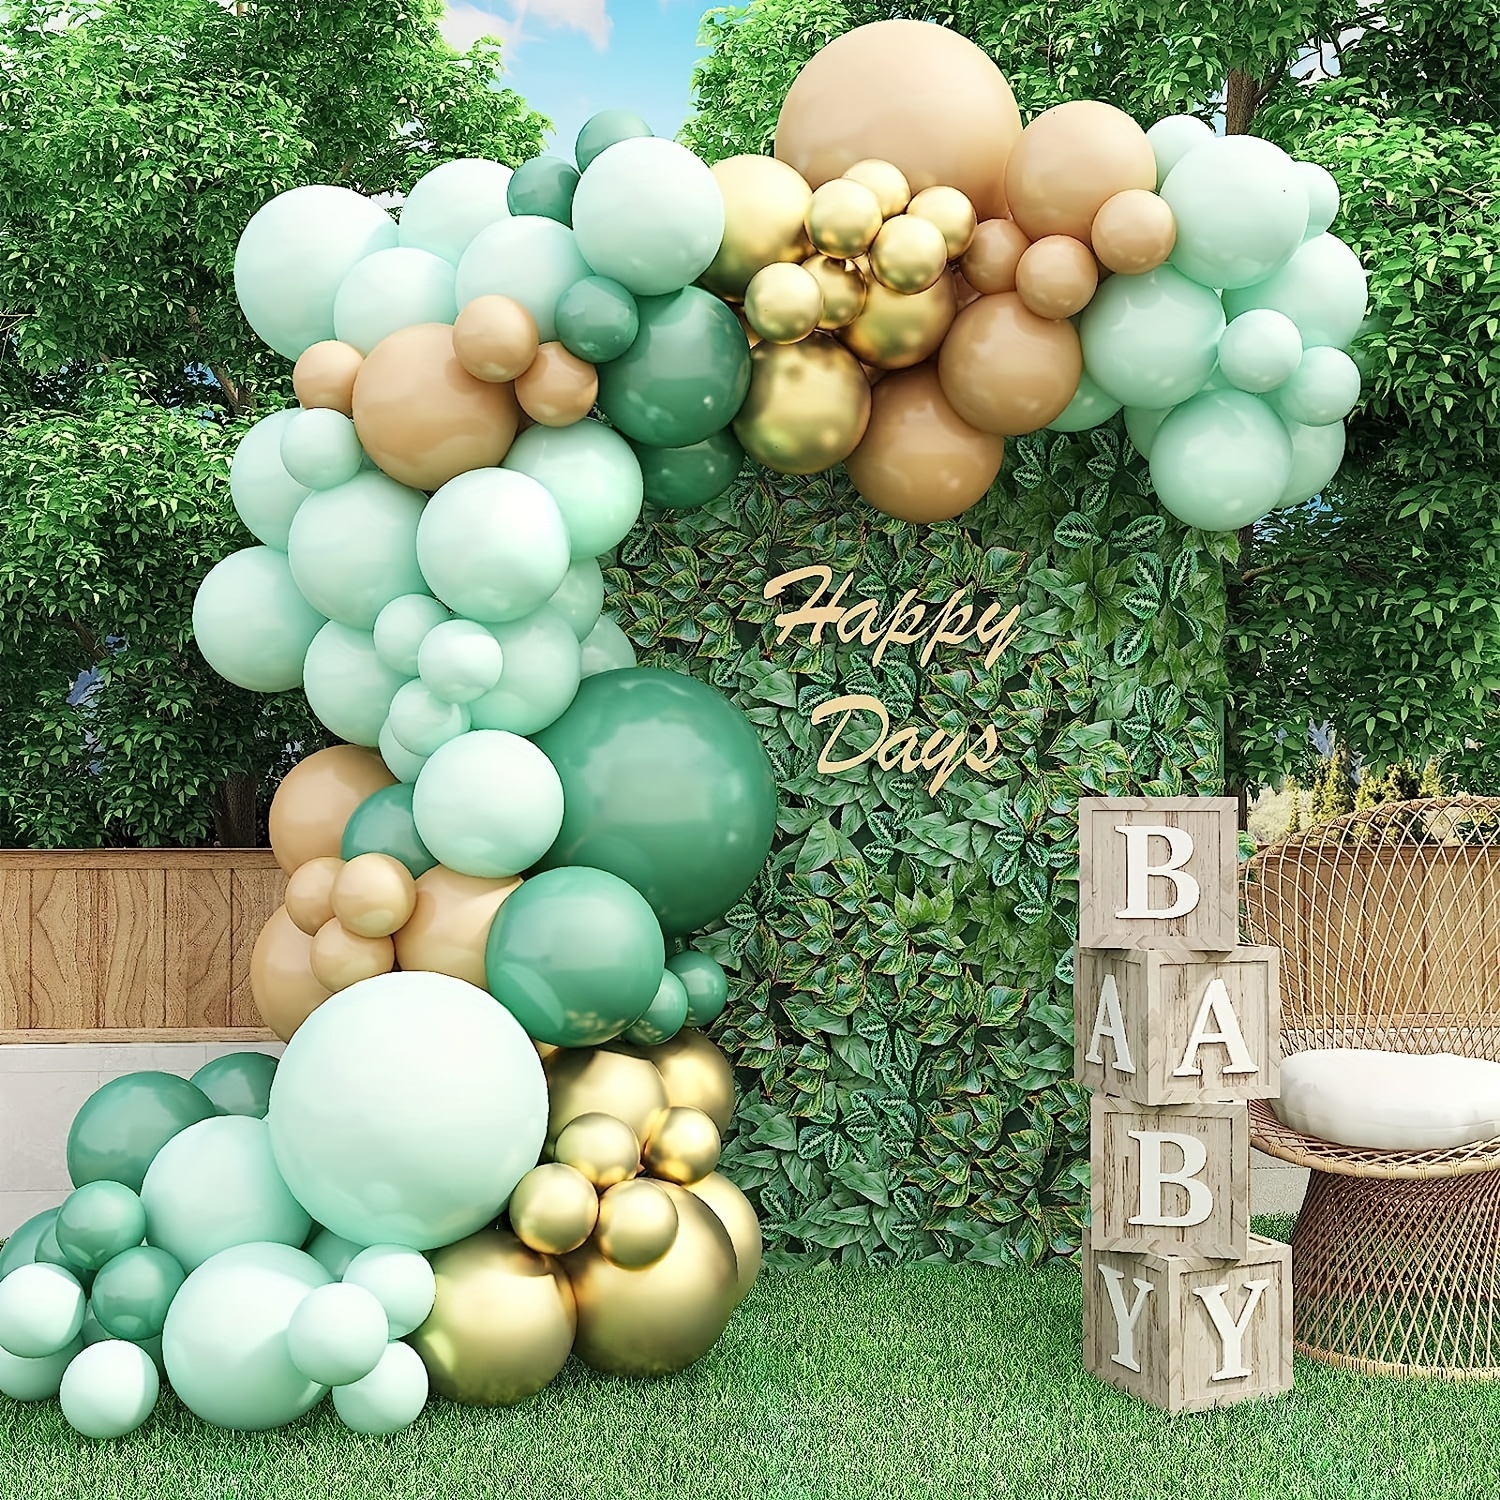 Oynearo Dark Teal and Mint Green Balloon Garland Kit for Wedding Bachelorette Bridal Shower Anniversary Celebration Baby Show